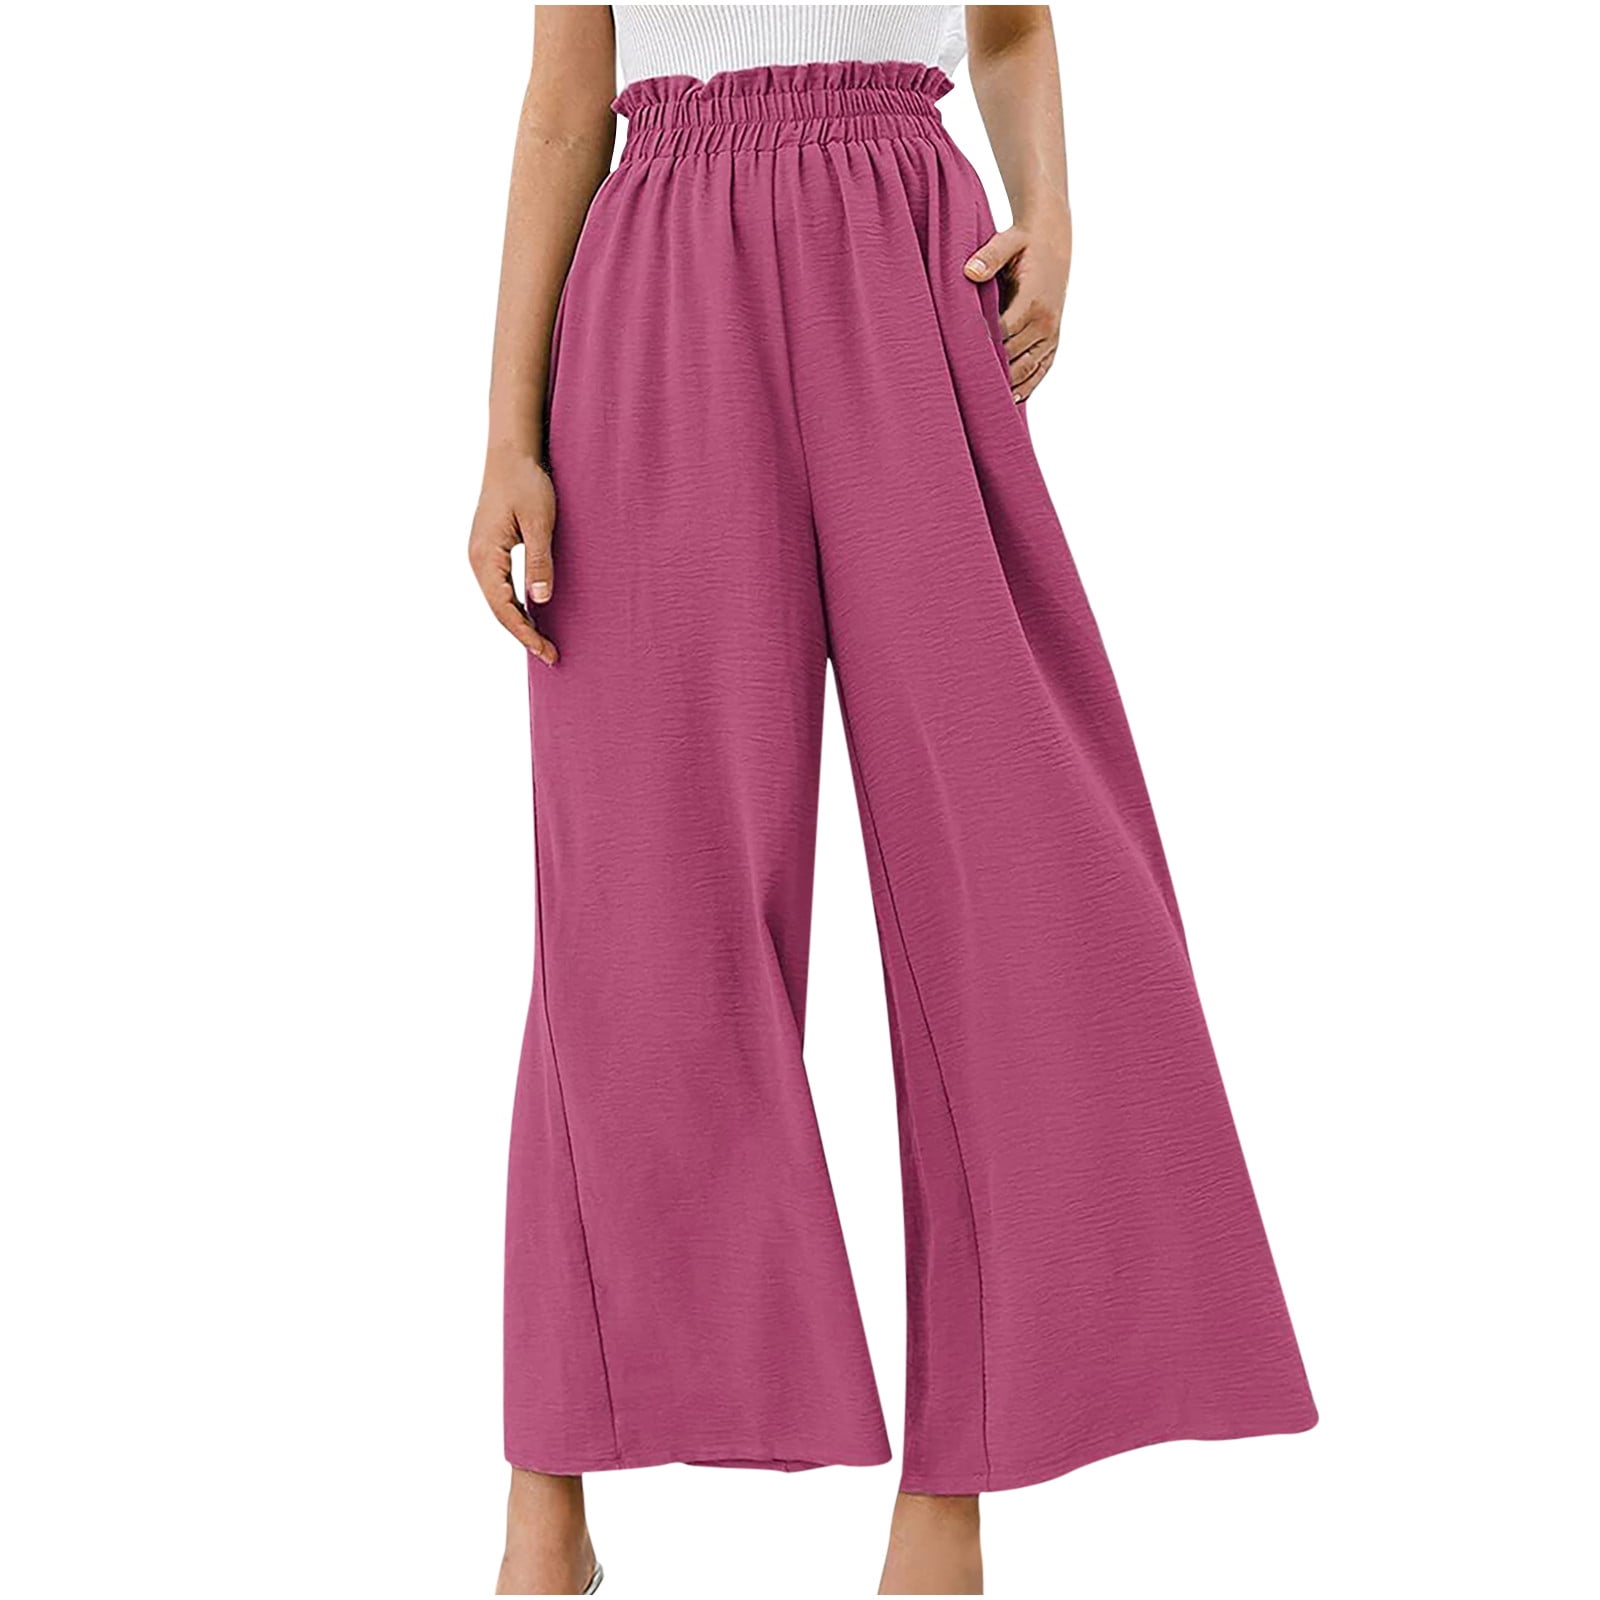 Polyester Plain Ladies Pink Palazzo Pants, Waist Size: L,XL at Rs